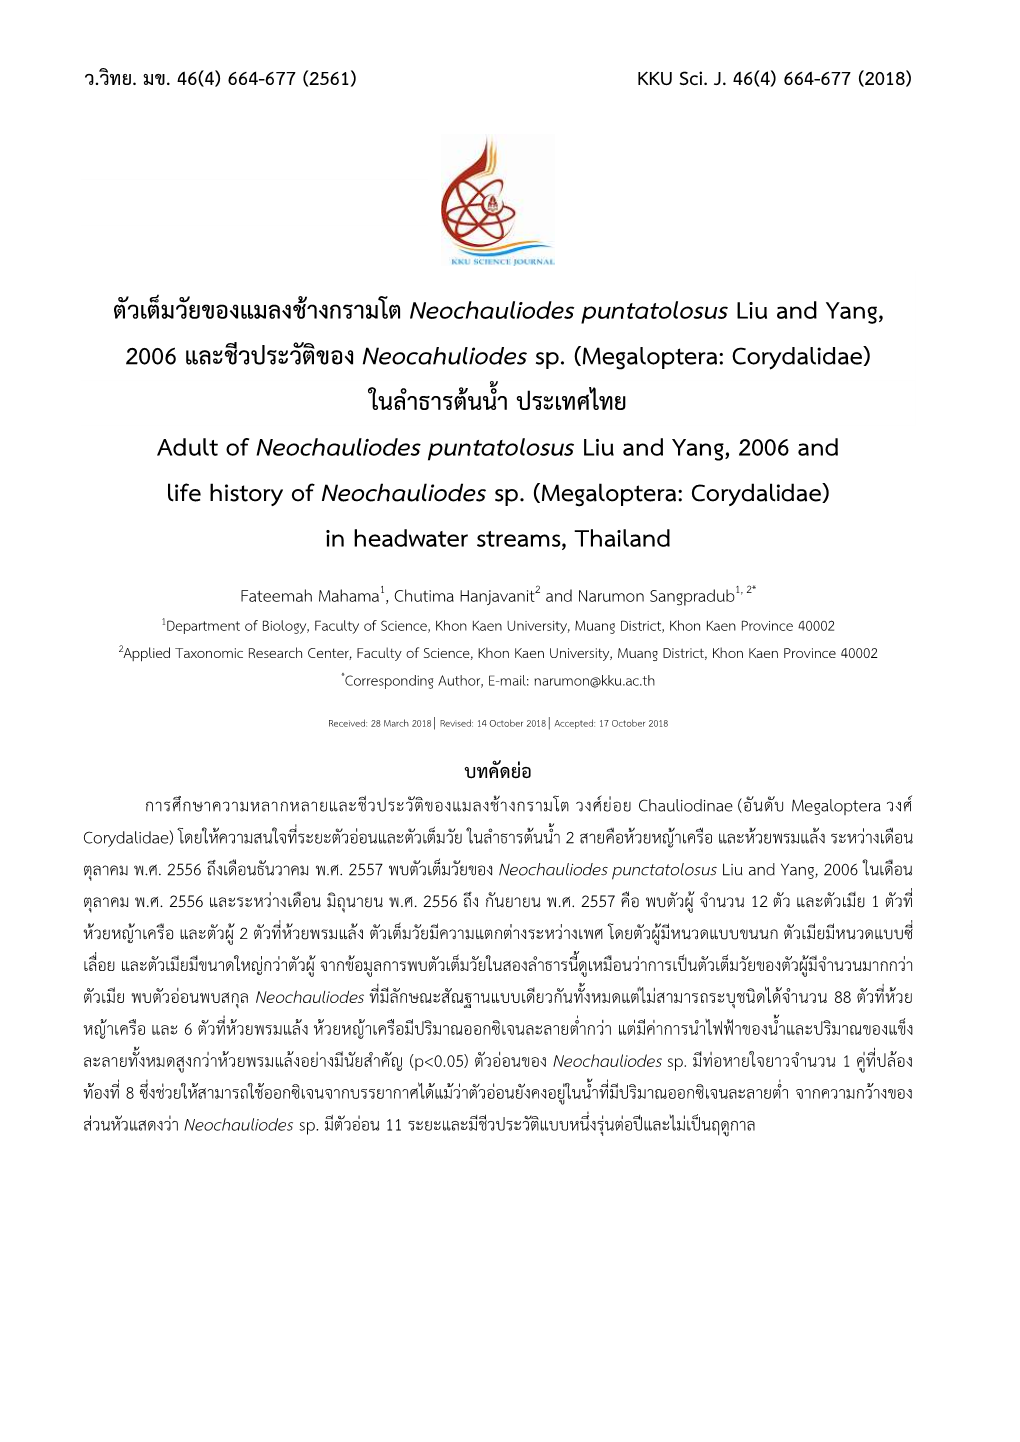 Megaloptera: Corydalidae) ในลําธารตนนํา้ ประเทศไทย Adult of Neochauliodes Puntatolosus Liu and Yang, 2006 and Life History of Neochauliodes Sp